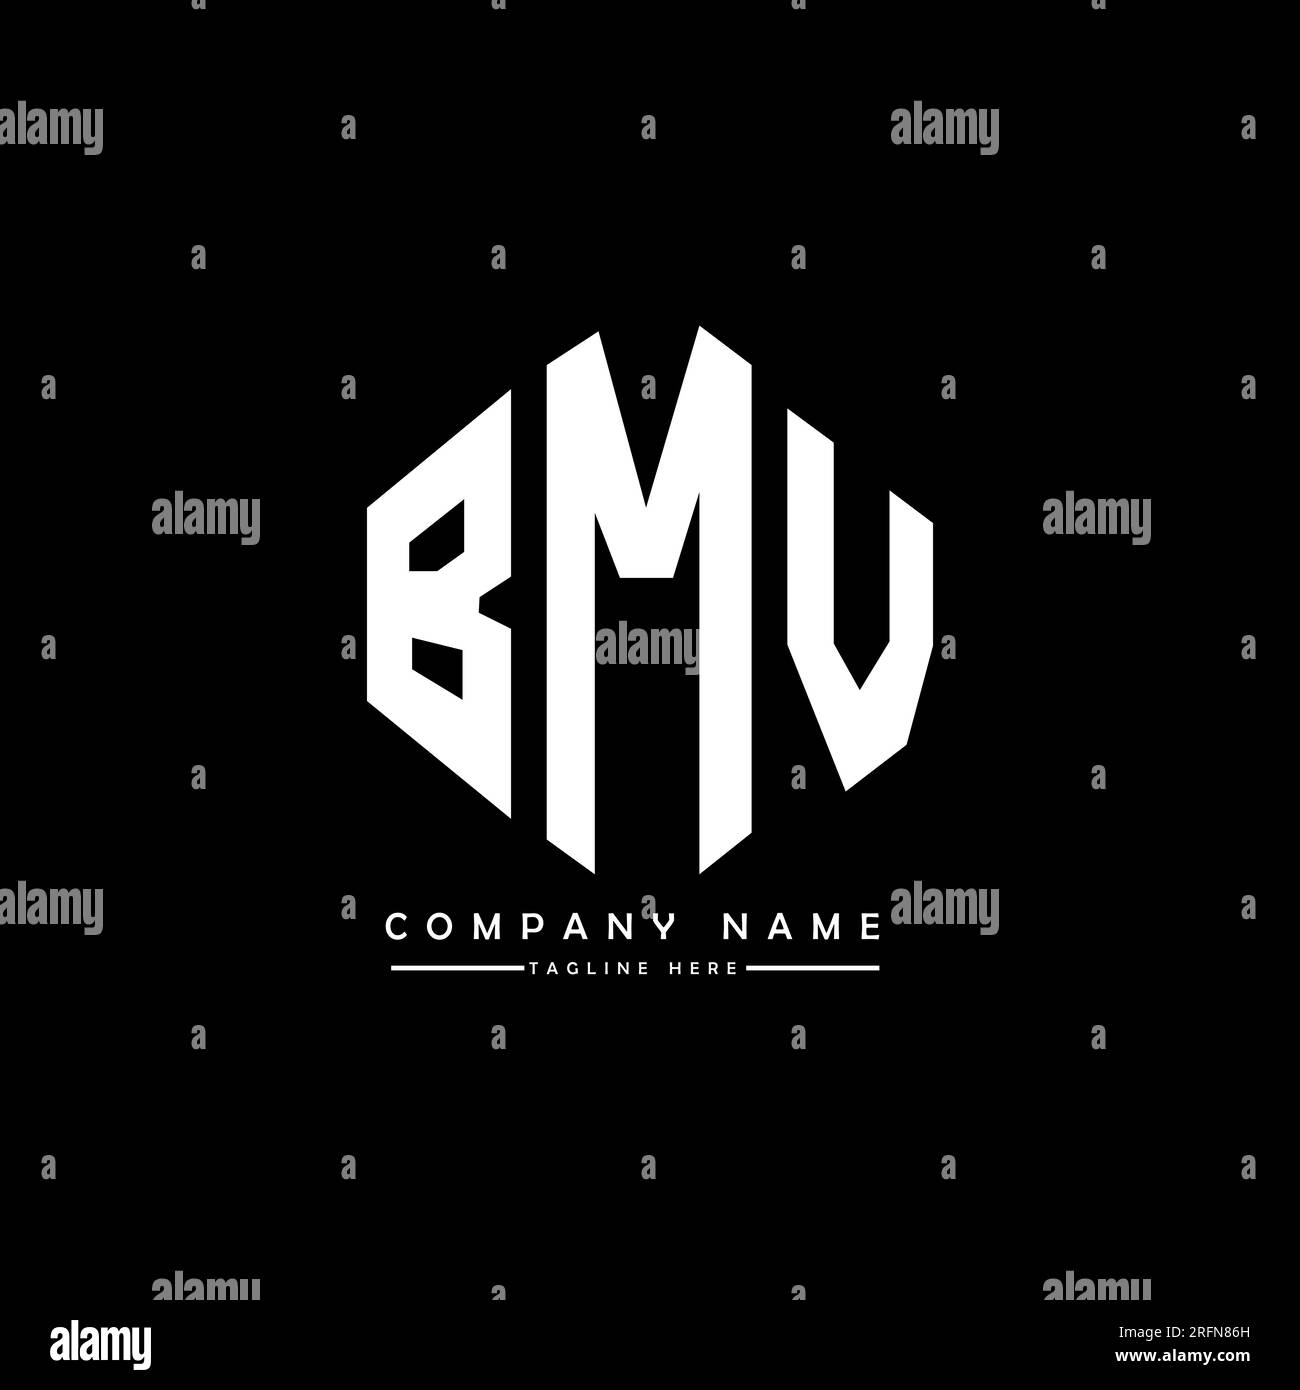 BMV letter logo design with polygon shape. BMV polygon and cube shape logo design. BMV hexagon vector logo template white and black colors. BMV Stock Vector